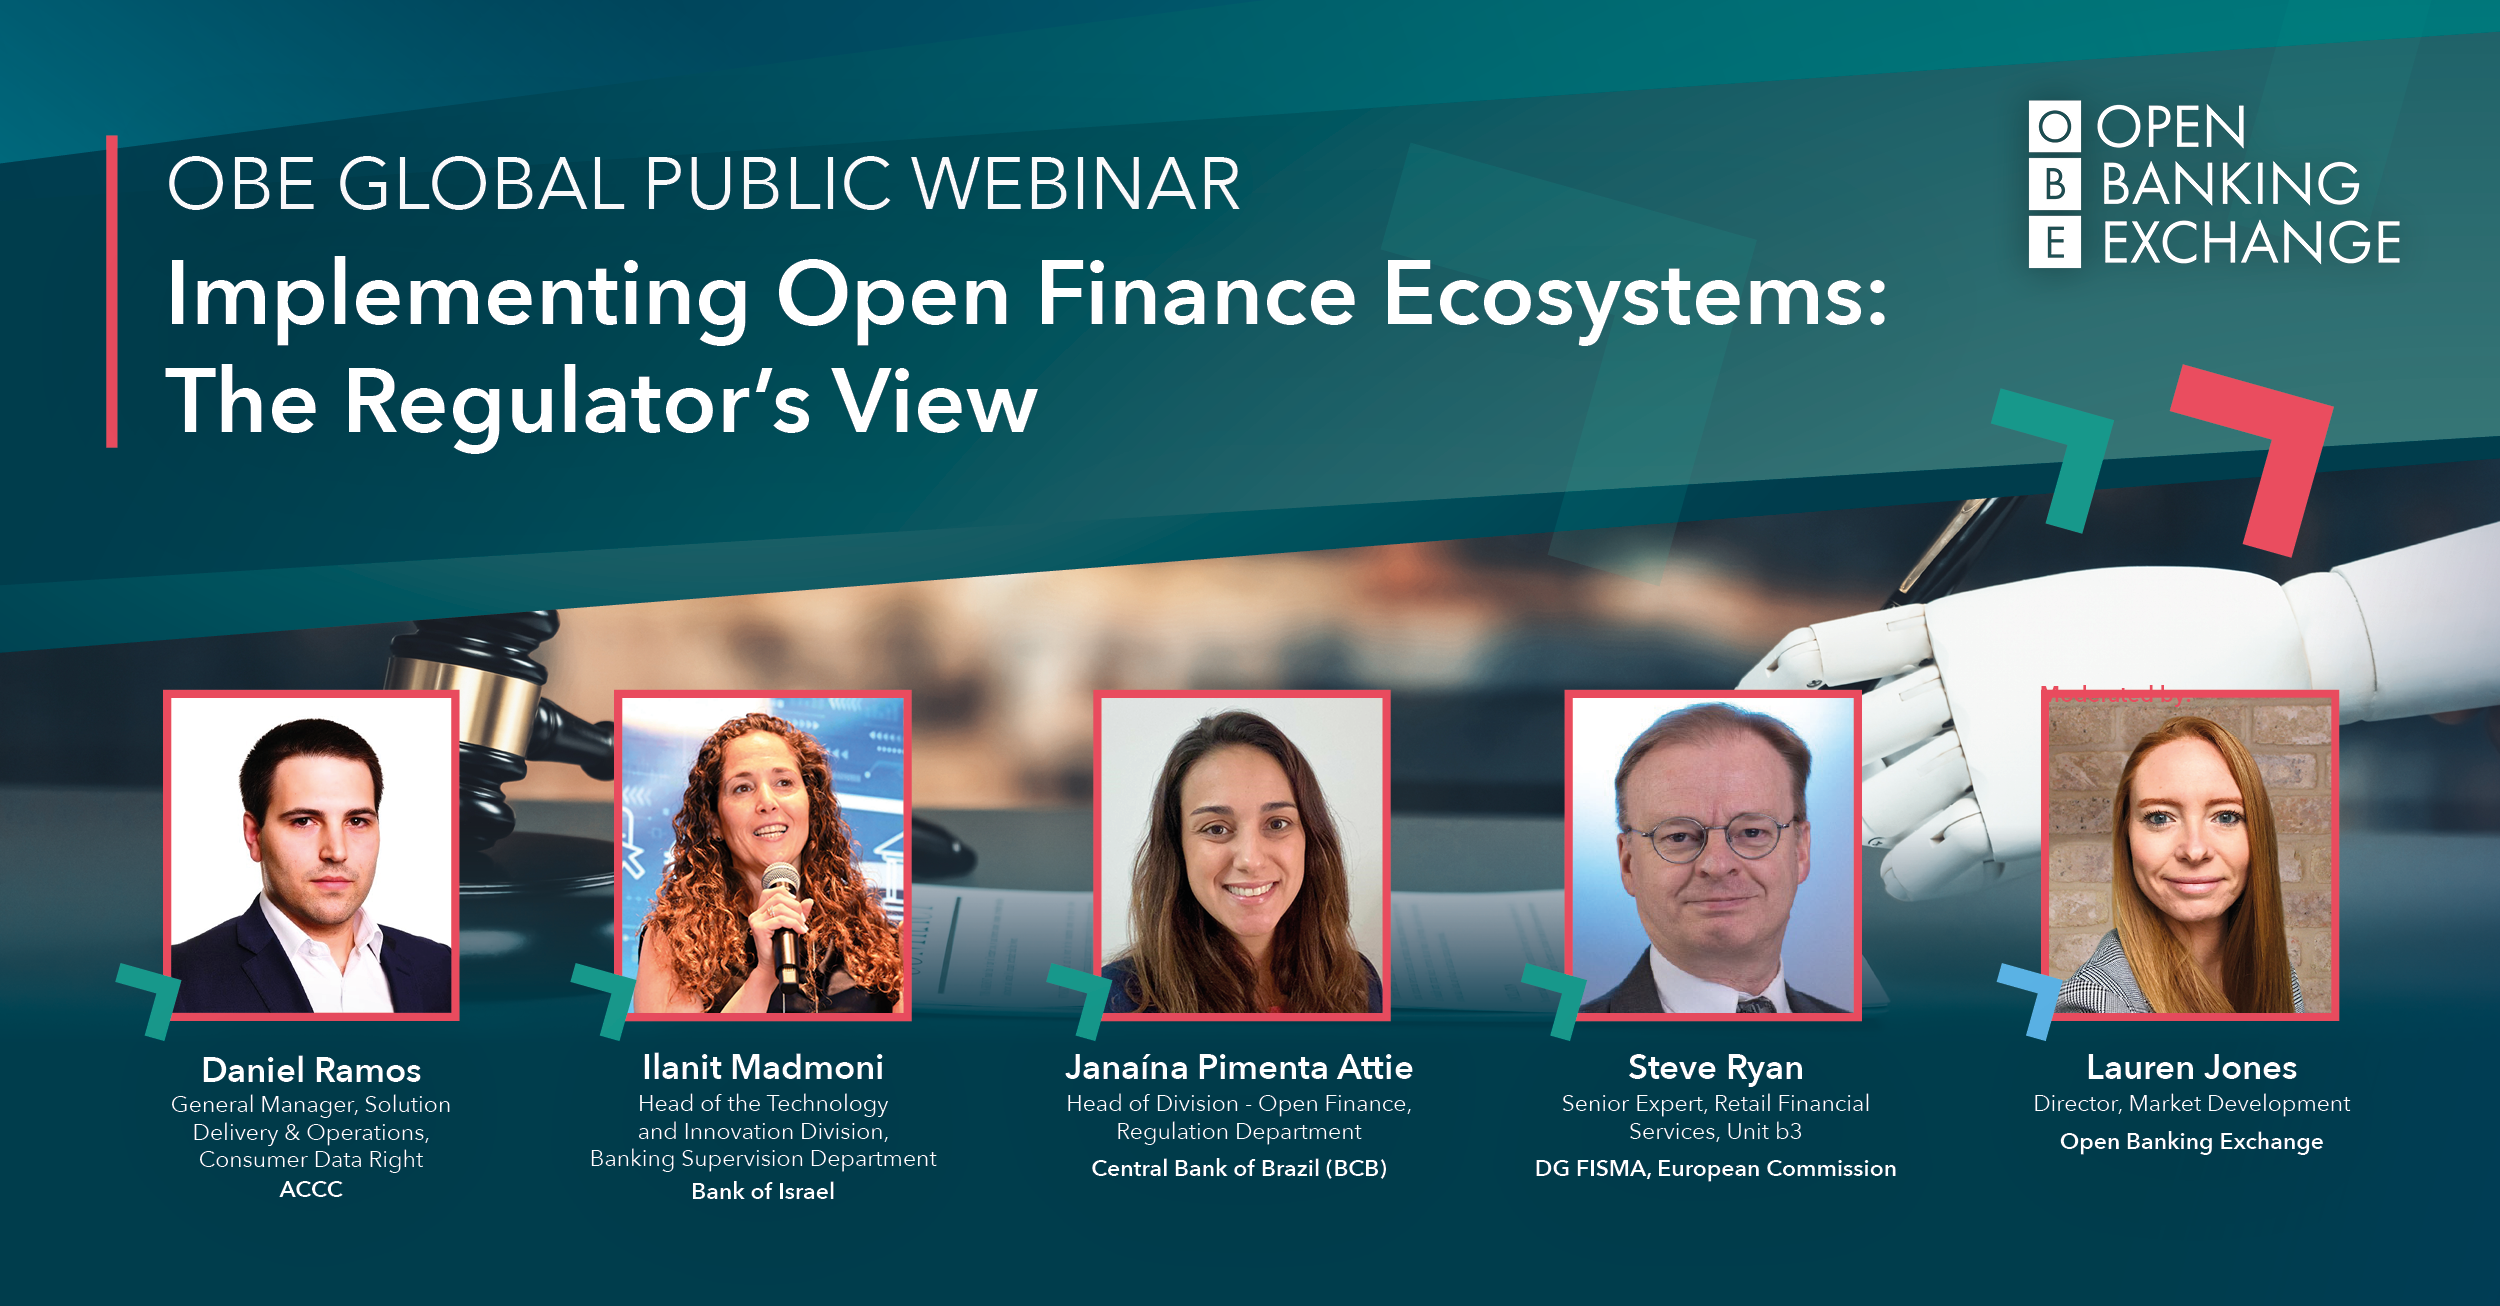 OBE Global Public Webinar: Implementing Open Finance Ecosystems – The Regulator’s View 